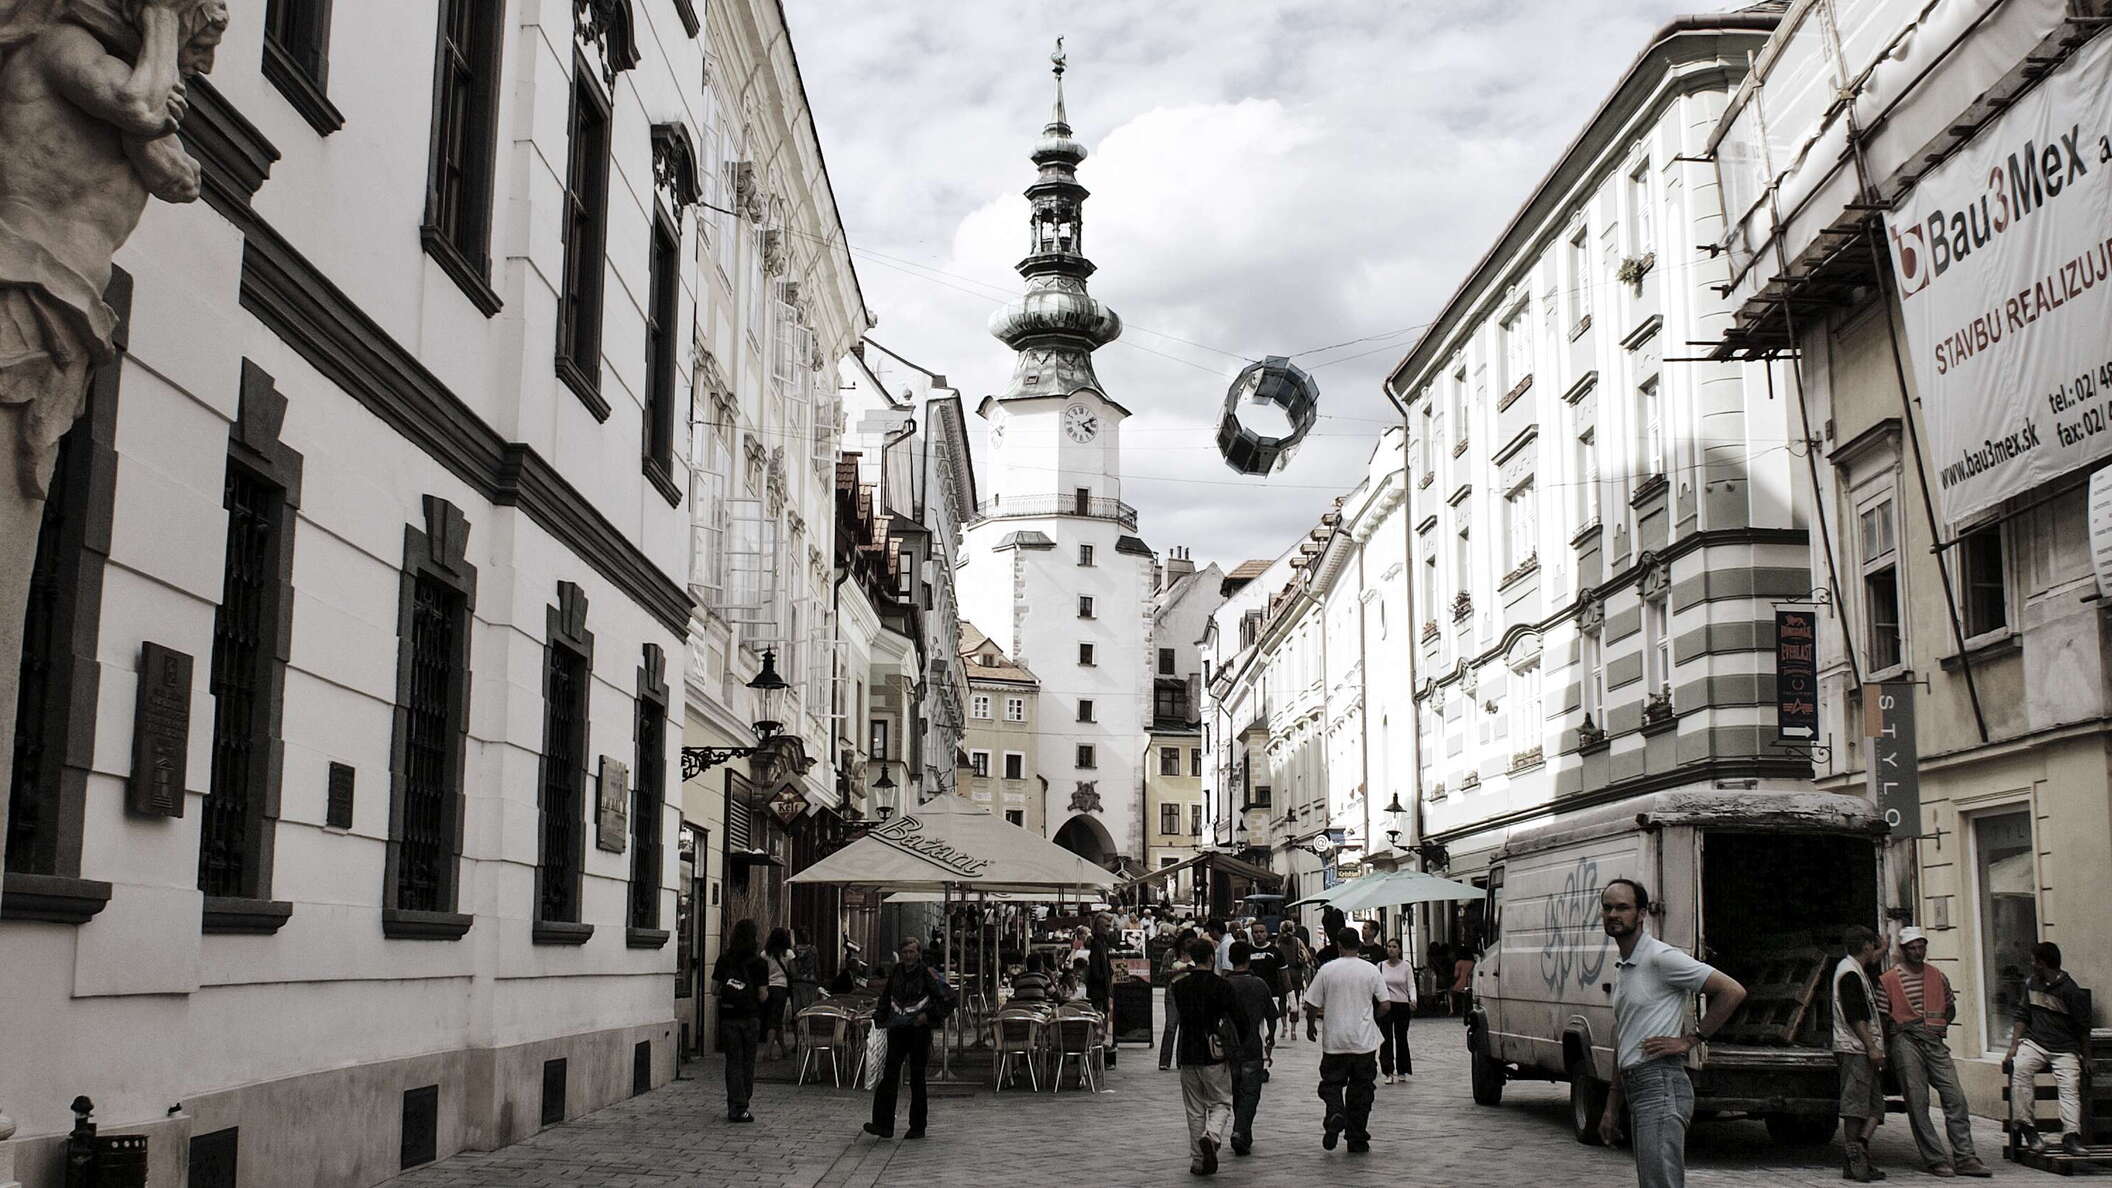 Bratislava | Staré Mesto with Michalská